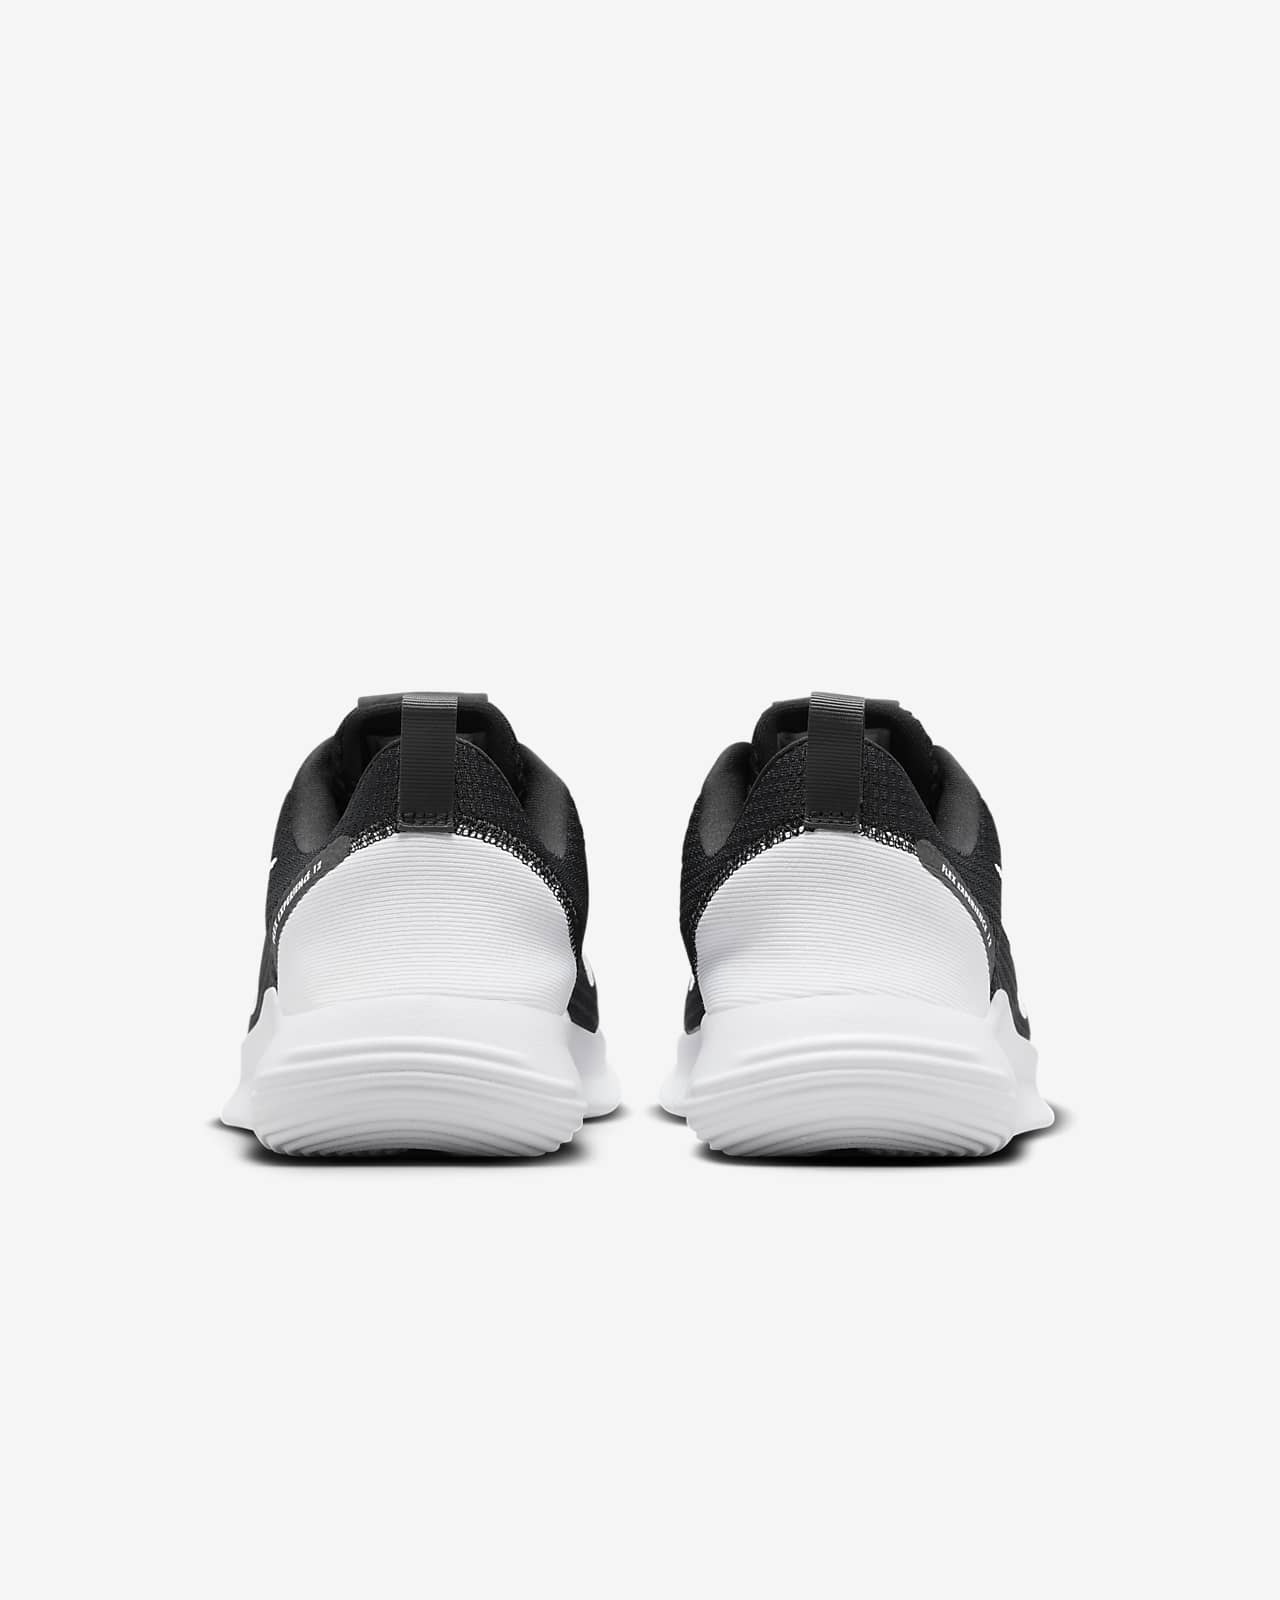 Nike Men's Flex Experience Run 9 4e Shoe, Black/White-Dark Smoke Grey, 7 :  : Clothing, Shoes & Accessories